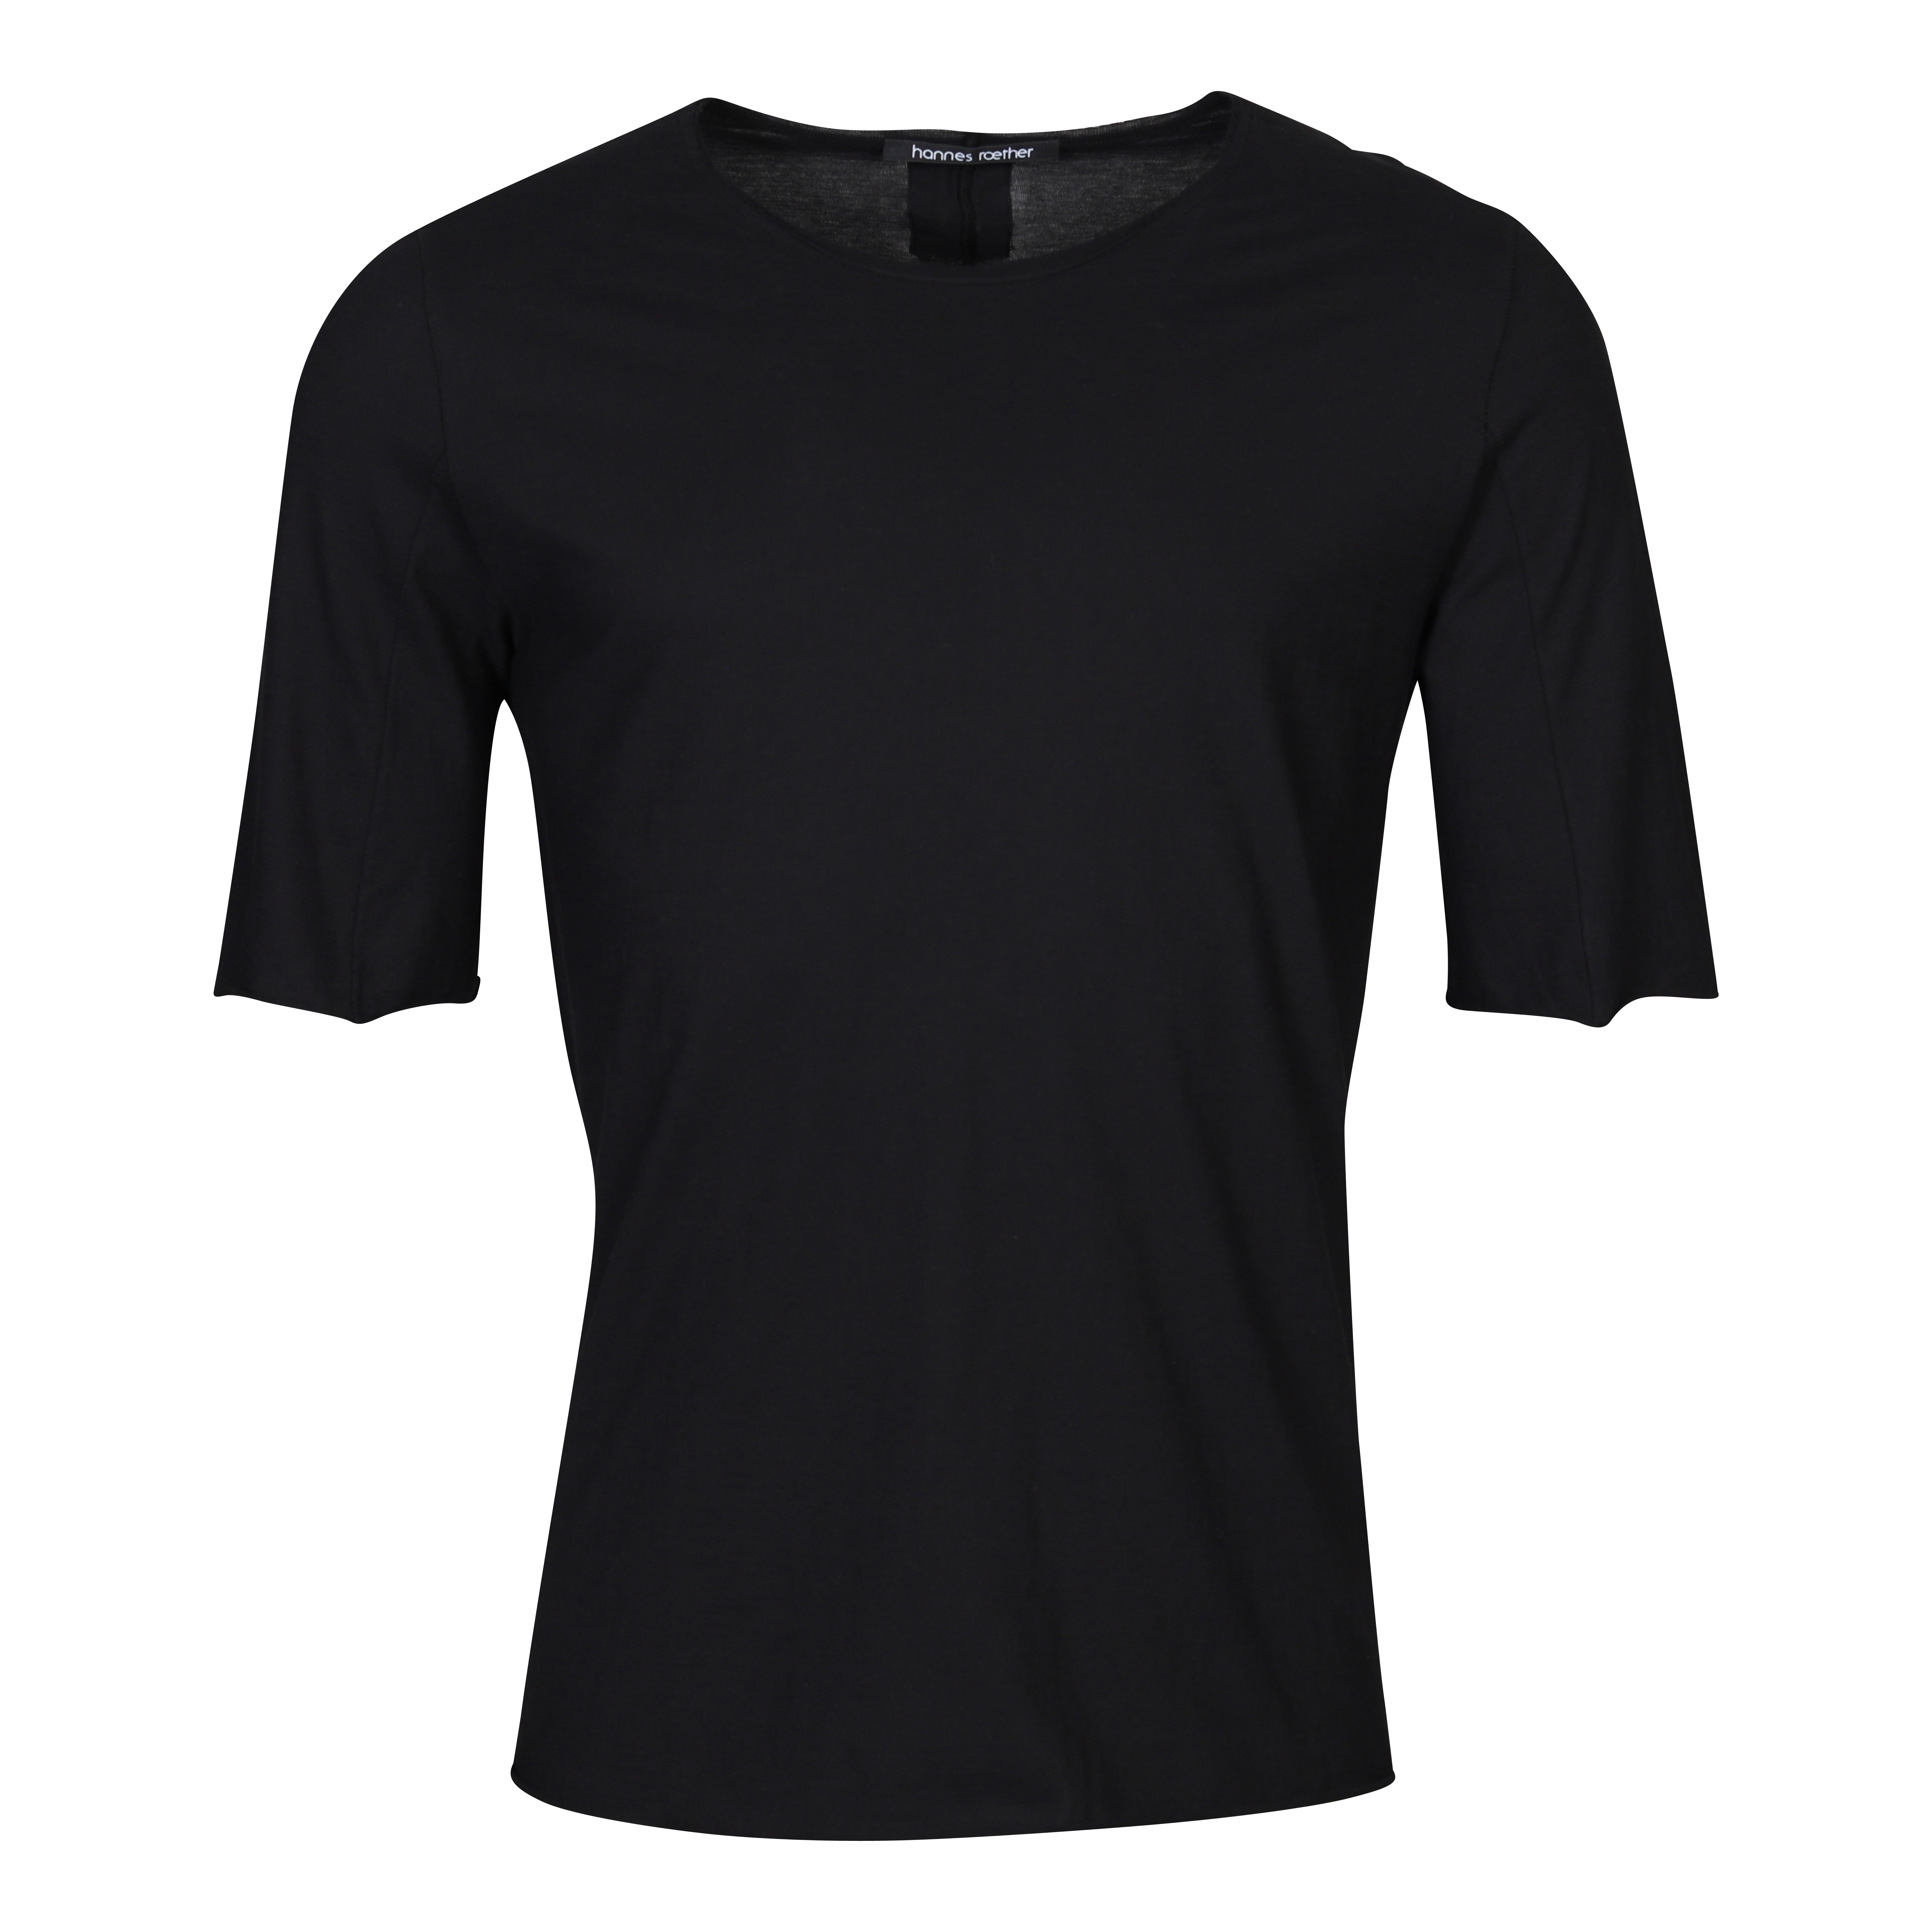 Hannes Roether Crewneck T-Shirt in Black L